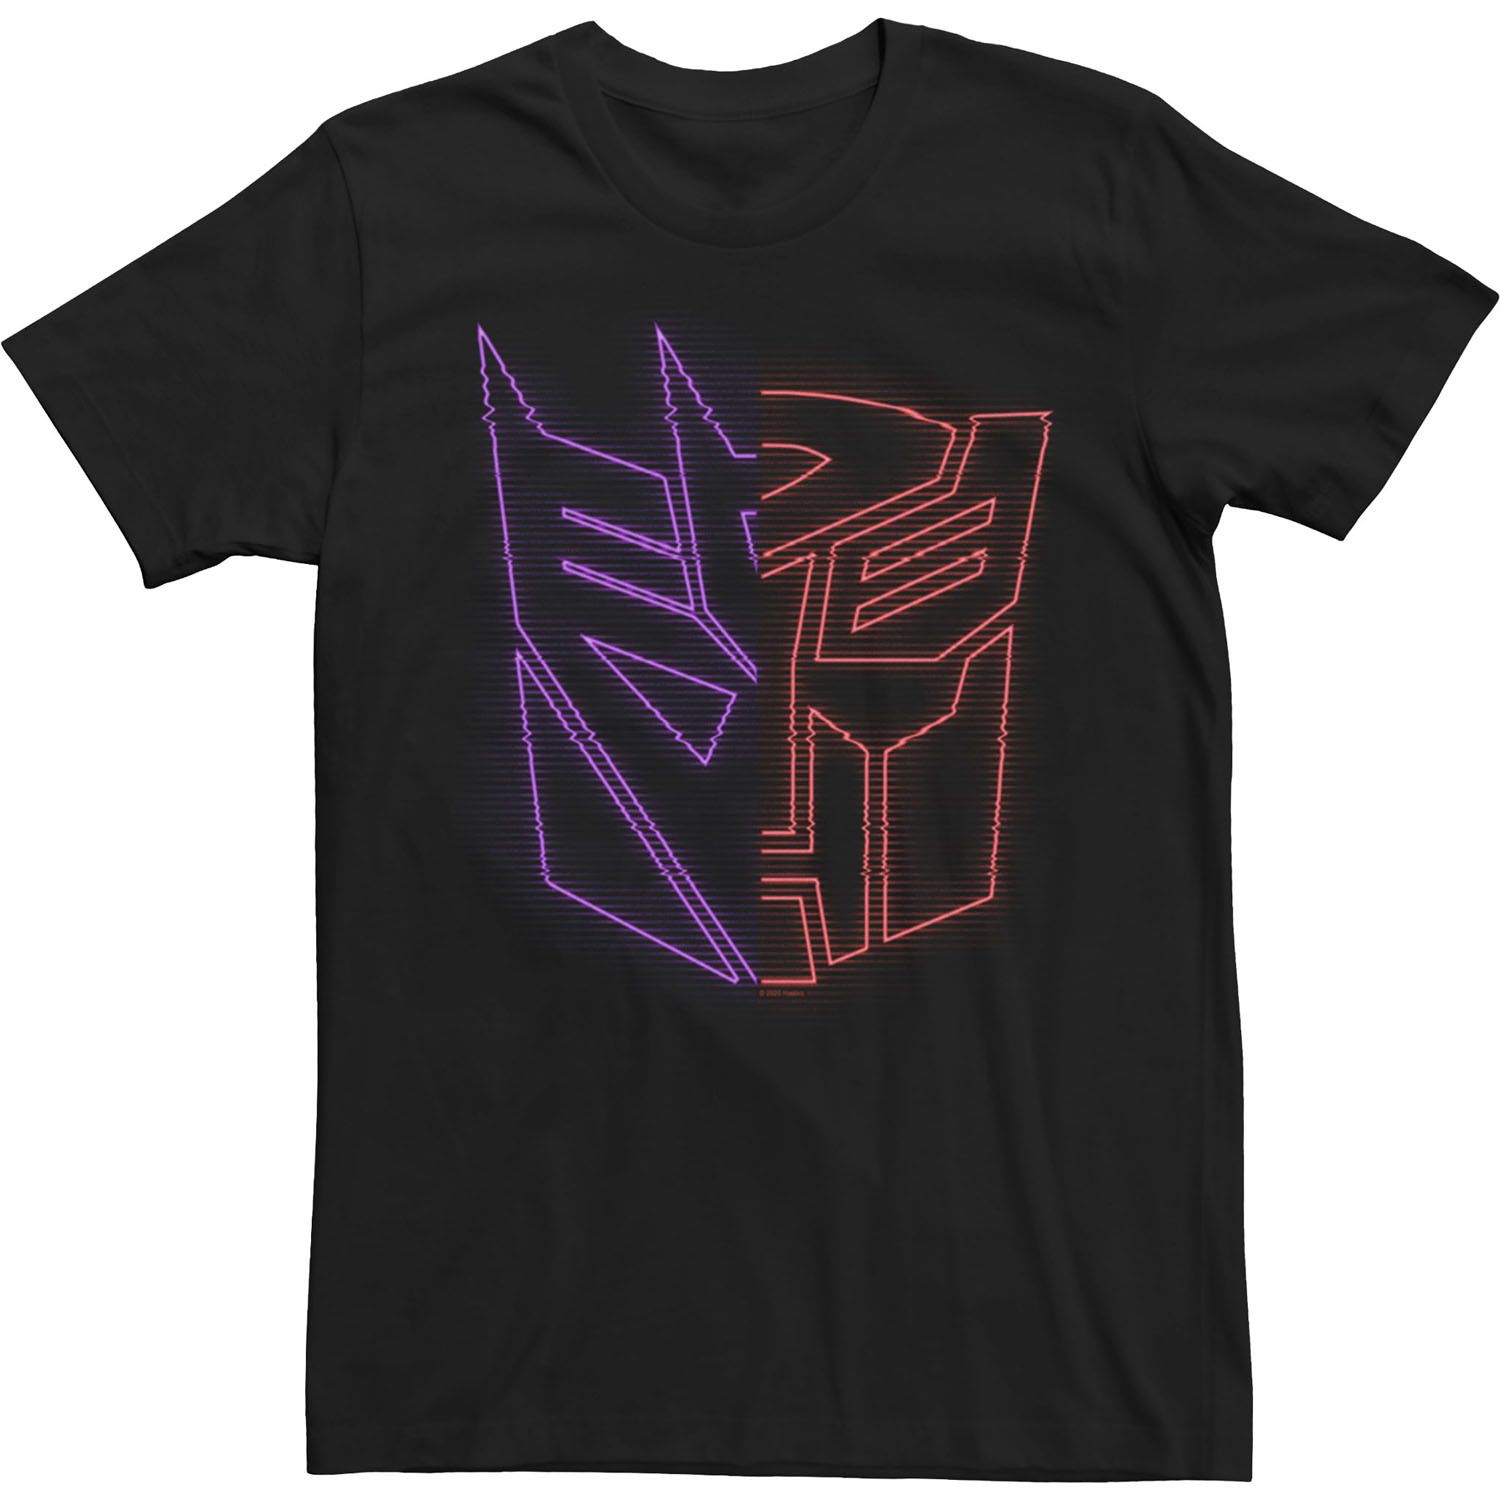 Мужская футболка Transformers: War For Cybertron с голографическим разрезом и логотипом Licensed Character